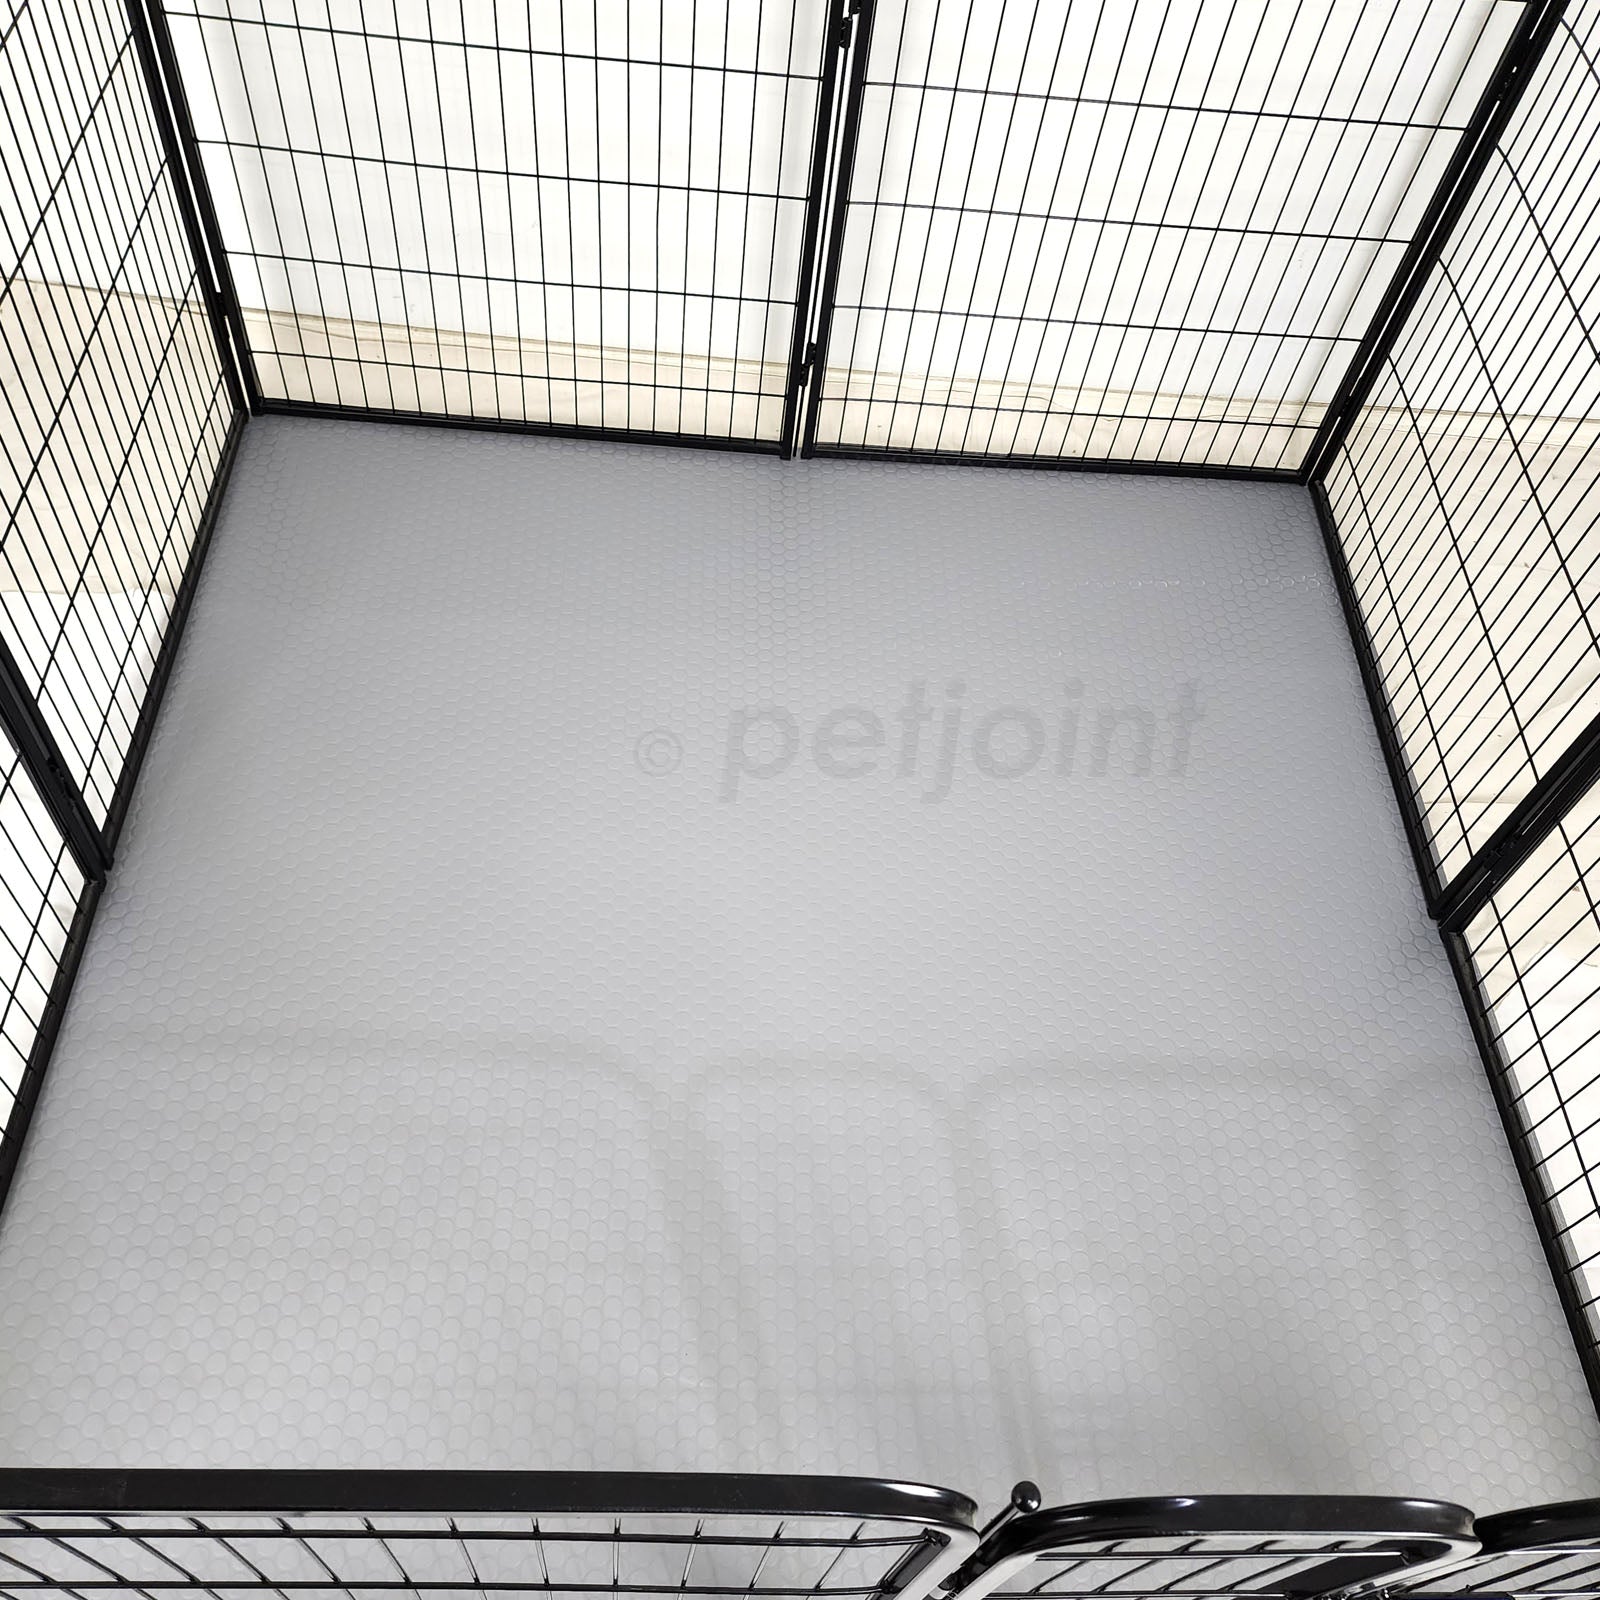 Heavyduty Rubber Mat for Playpens, Enclosures 1.6m x 1.6m Waterproof –  PetJoint